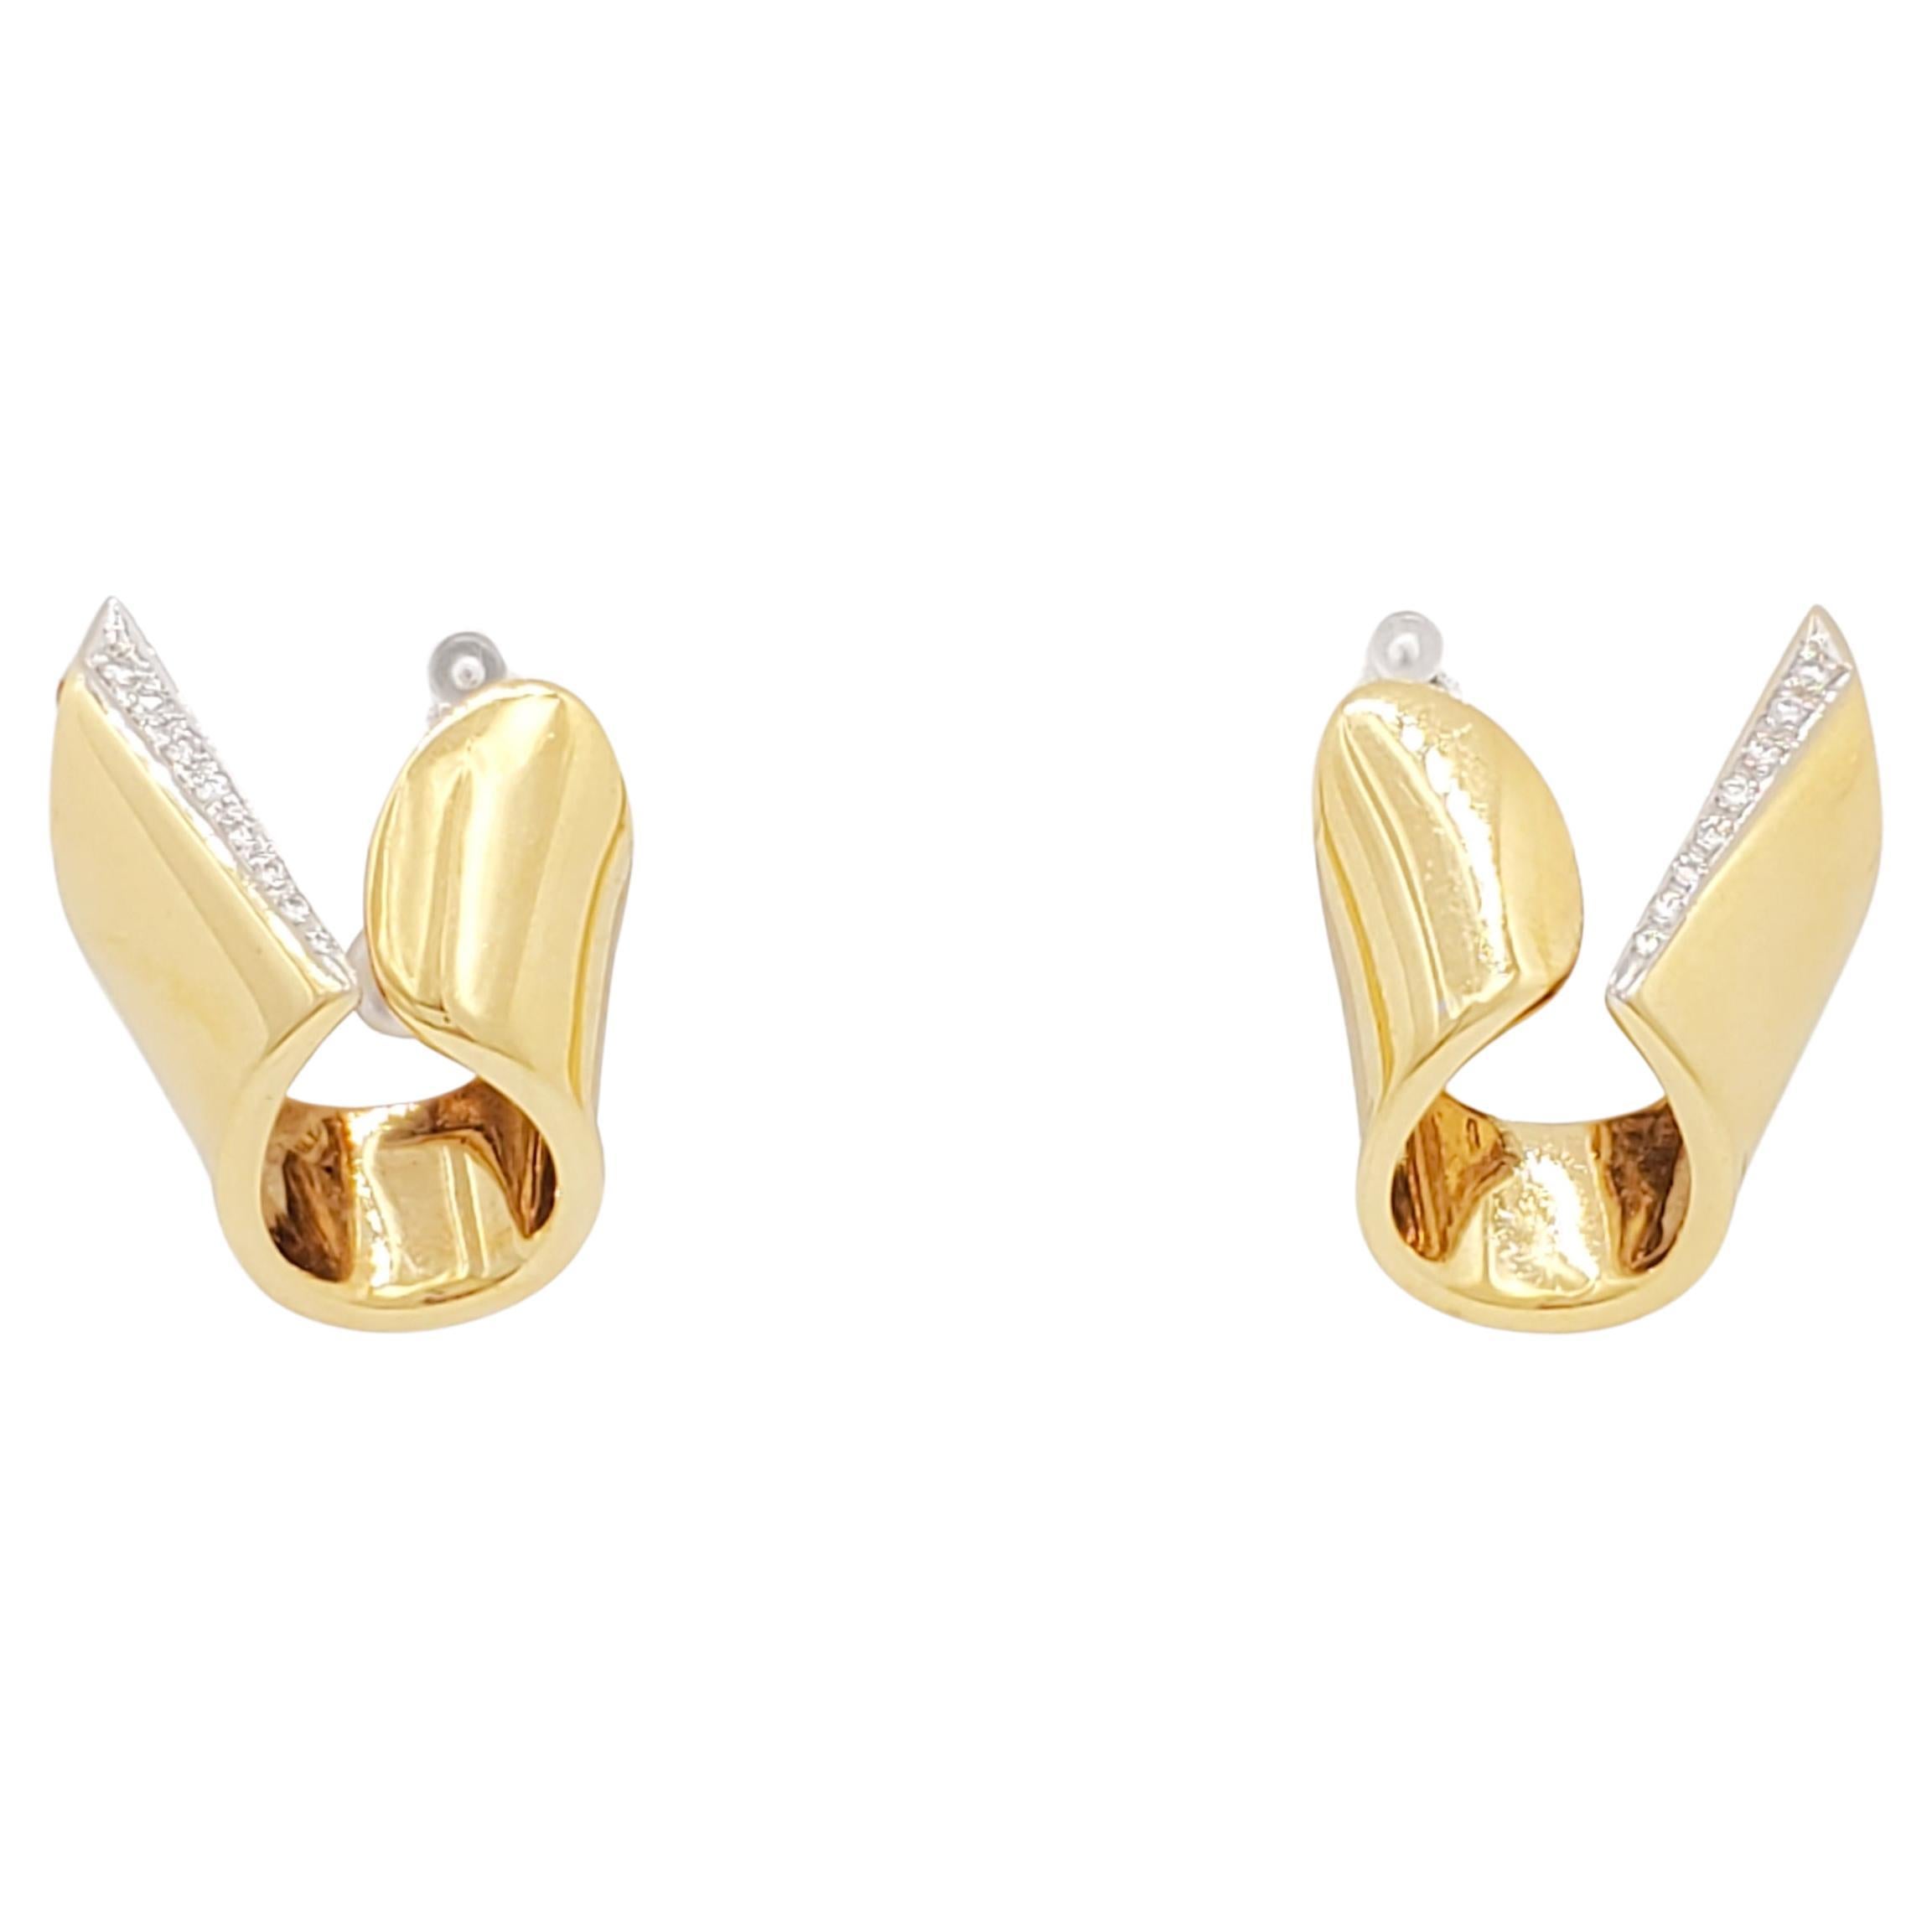 White Diamond and 18k Yellow Gold Earrings